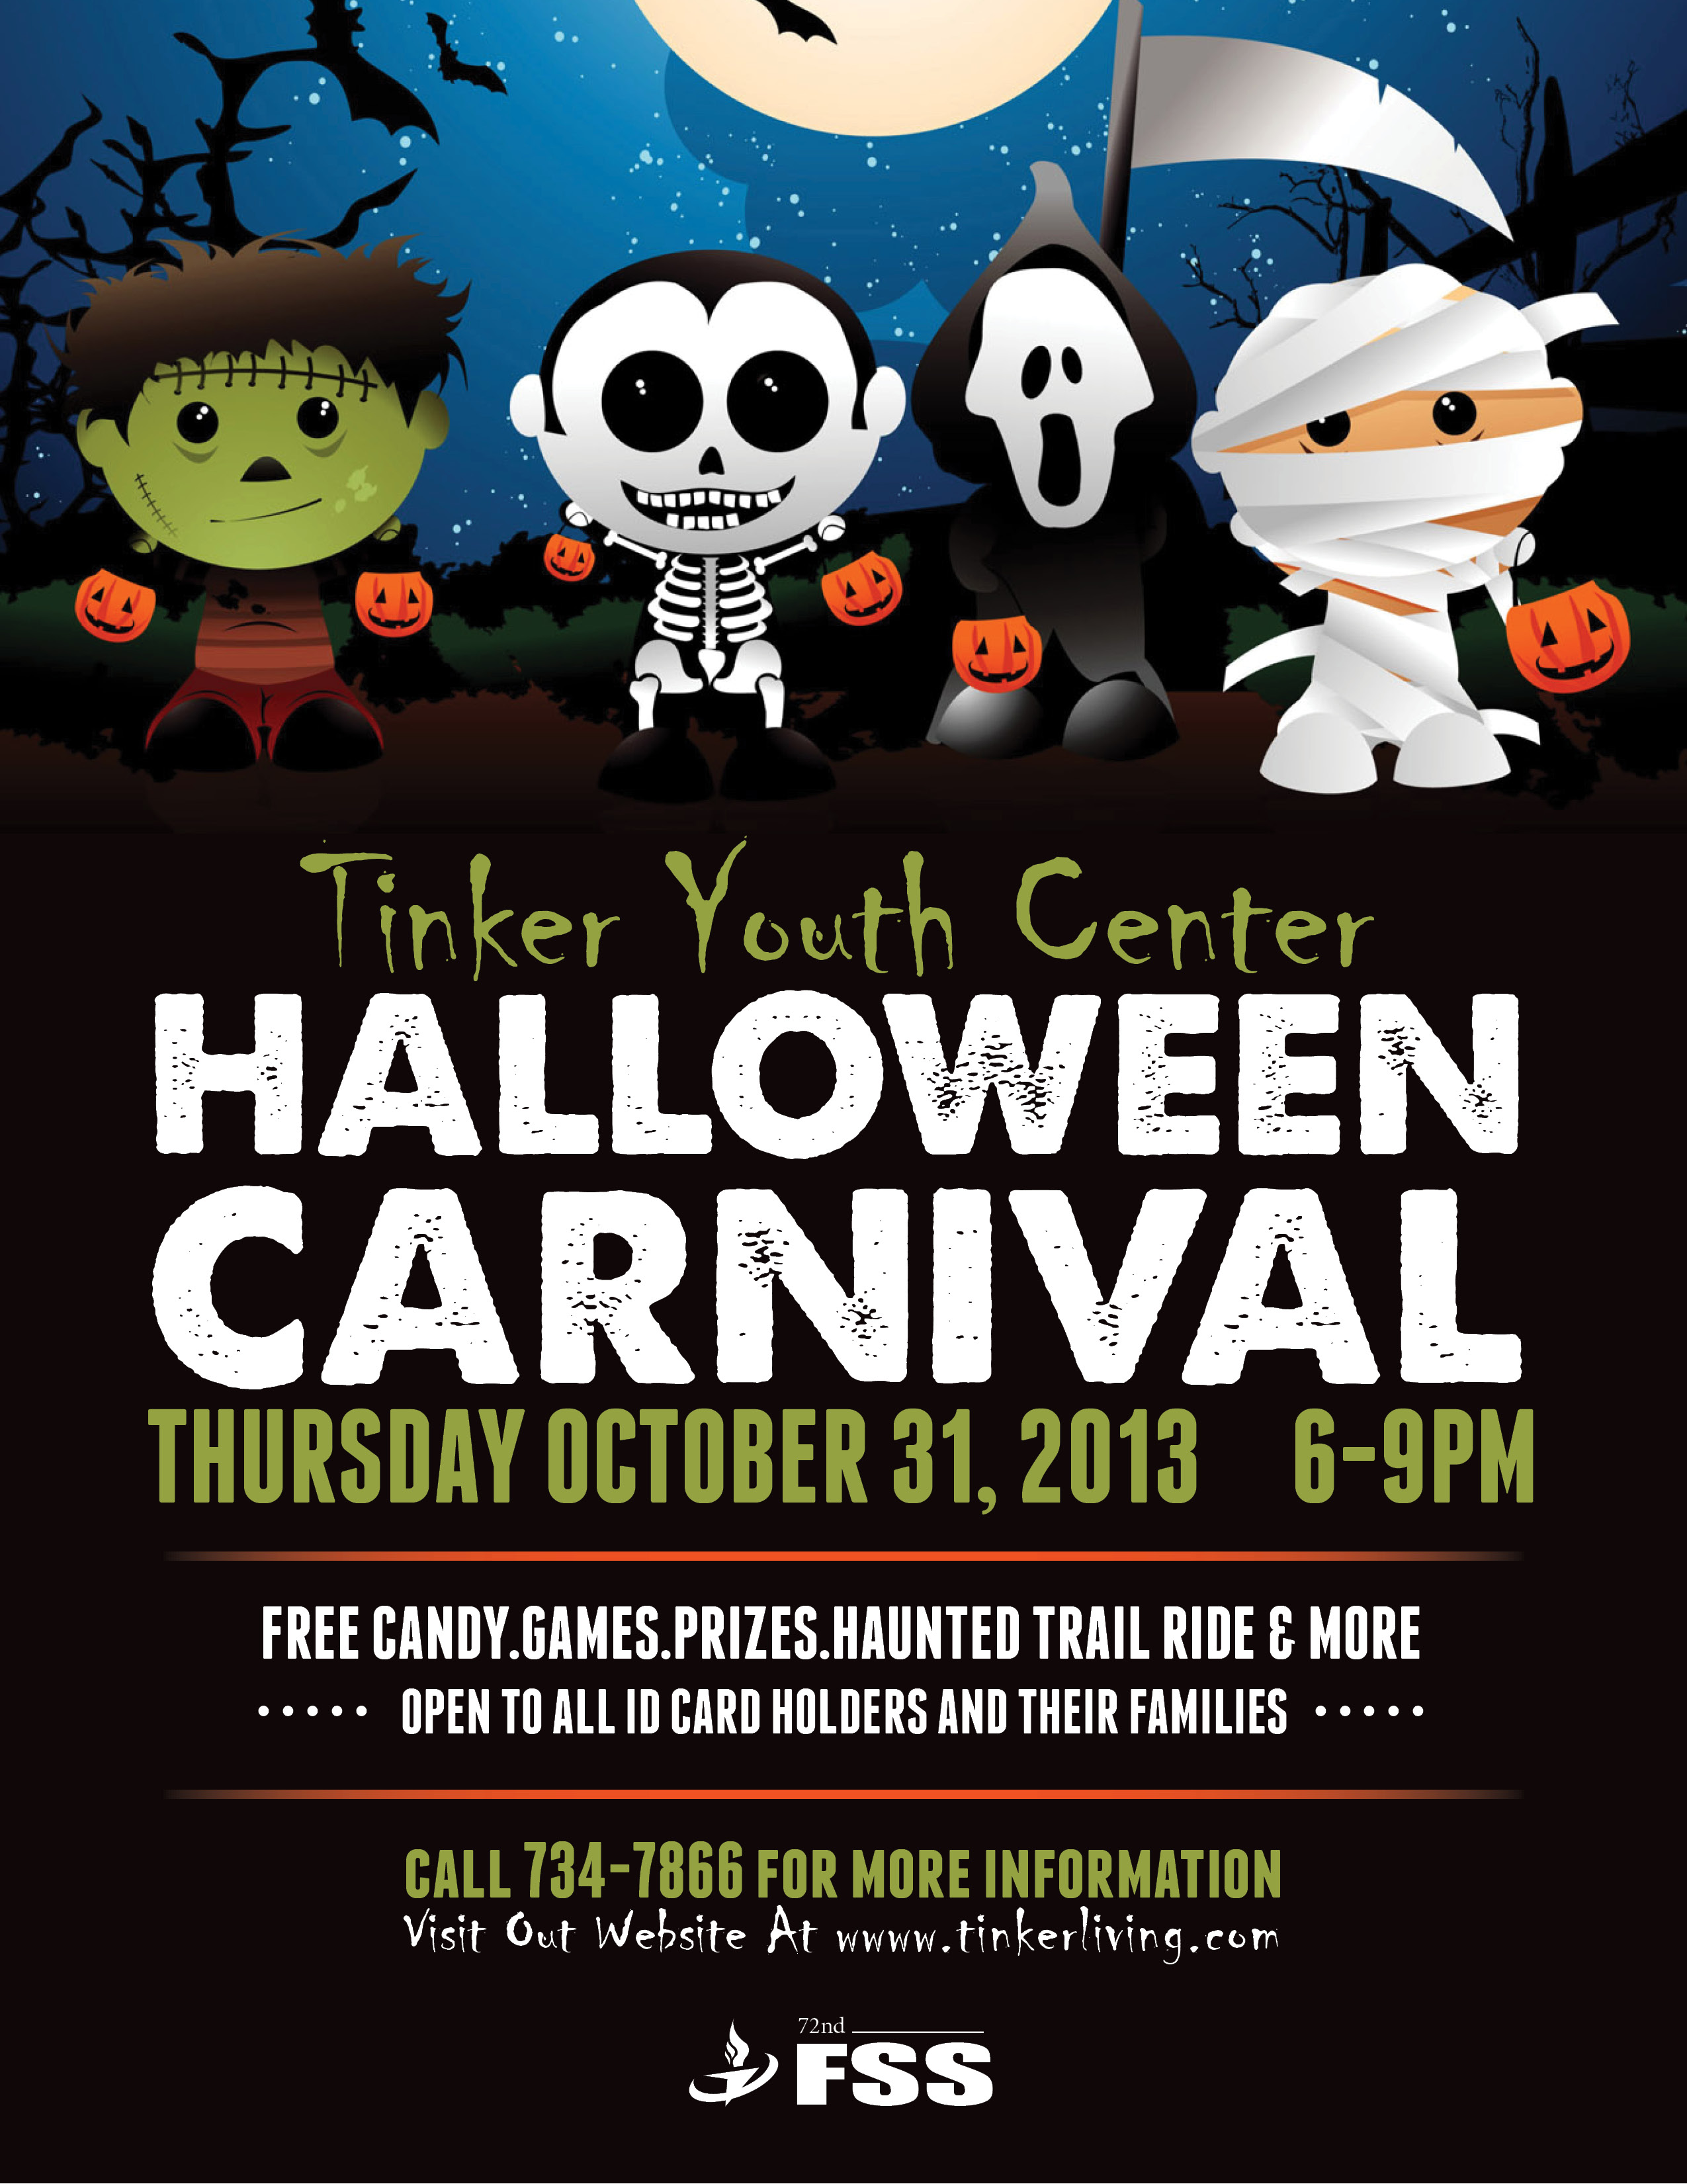 Halloween Costume Contest Flyer Yc Halloween Carnival Flyer